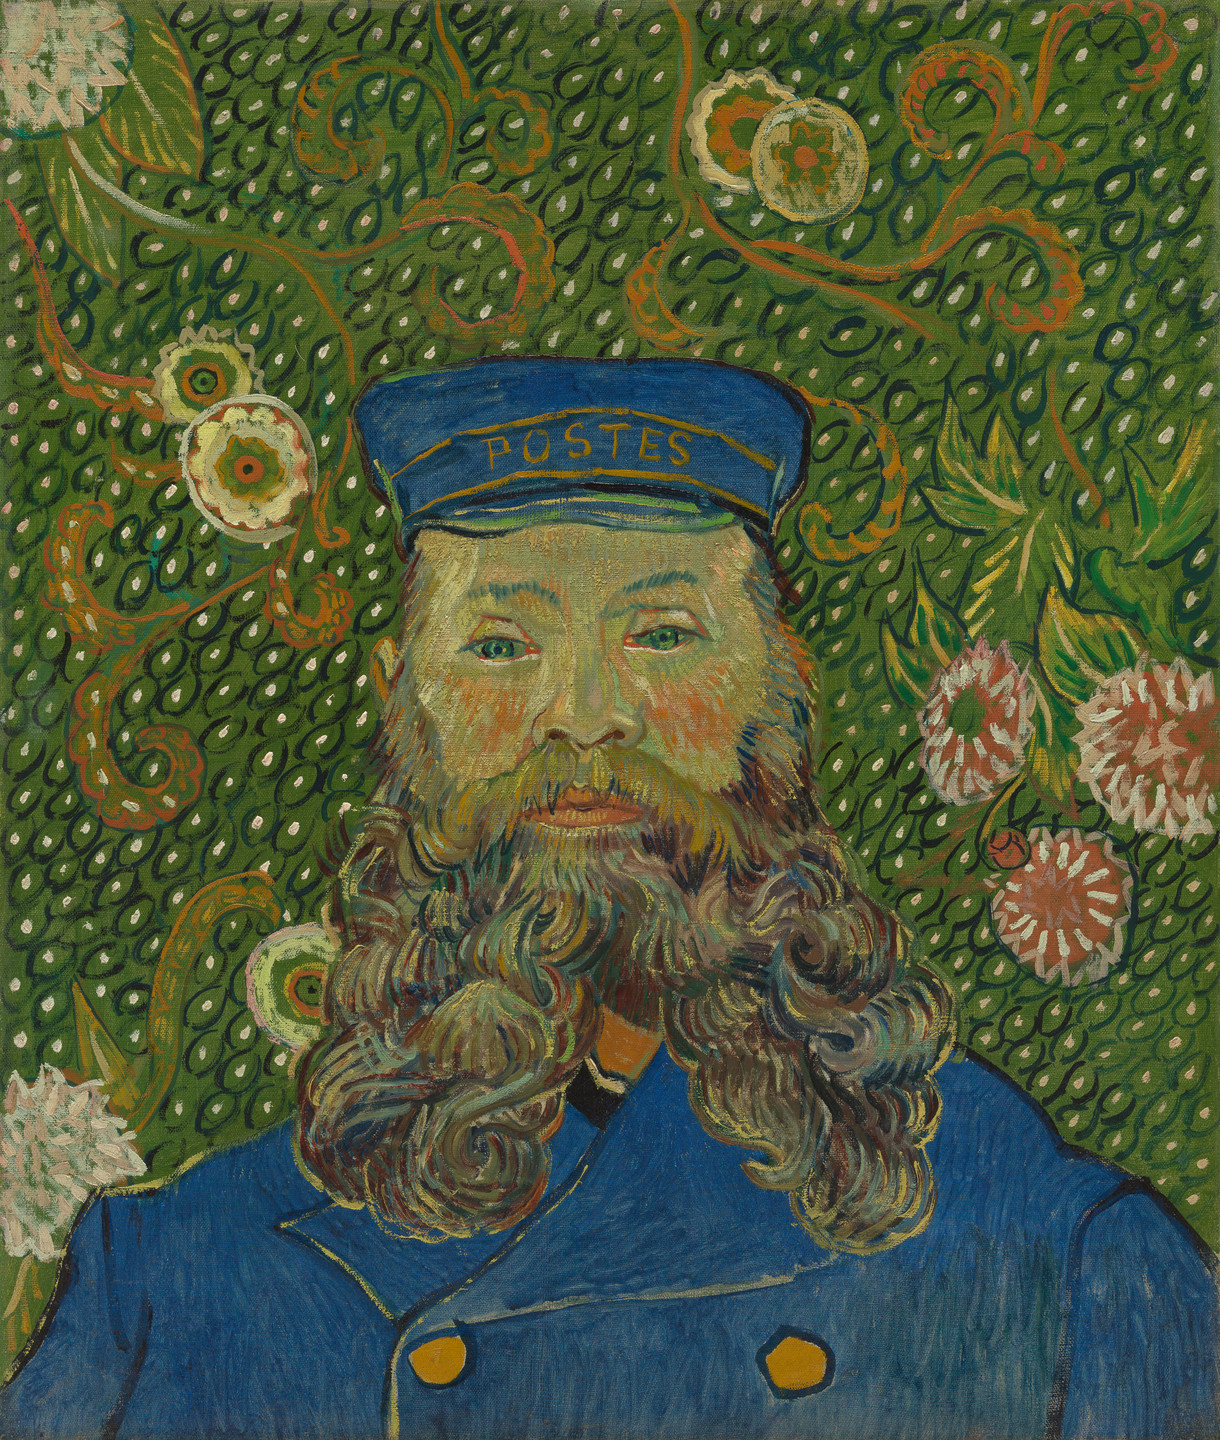 Vincent van Gogh, Portrait of Joseph Roulin Arles, early 1889. The Museum of Modern Art, New York.